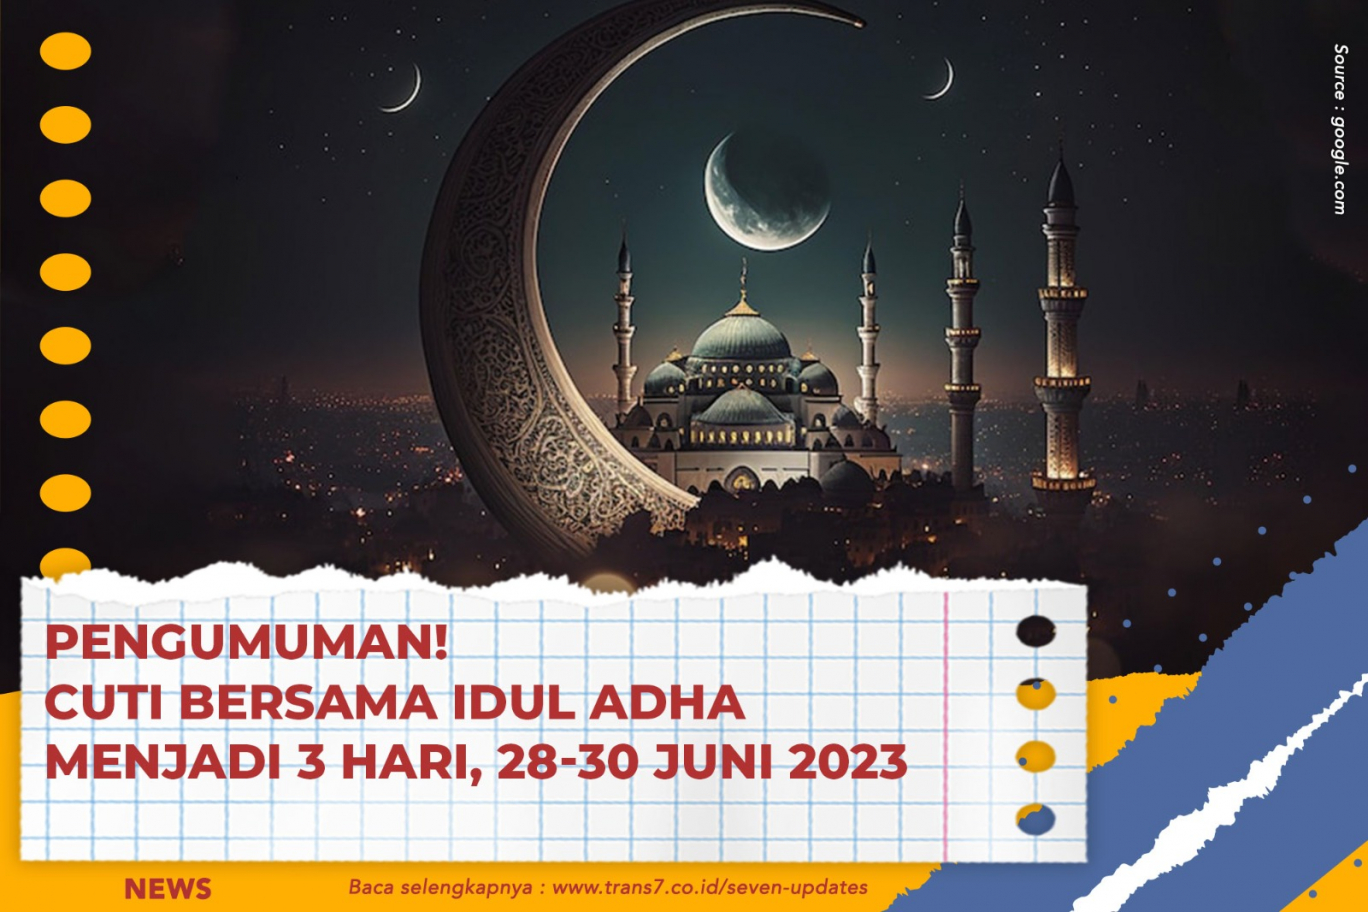 TRANS7 Pengumuman! Cuti Bersama Idul Adha Menjadi 3 Hari, 2830 Juni 2023